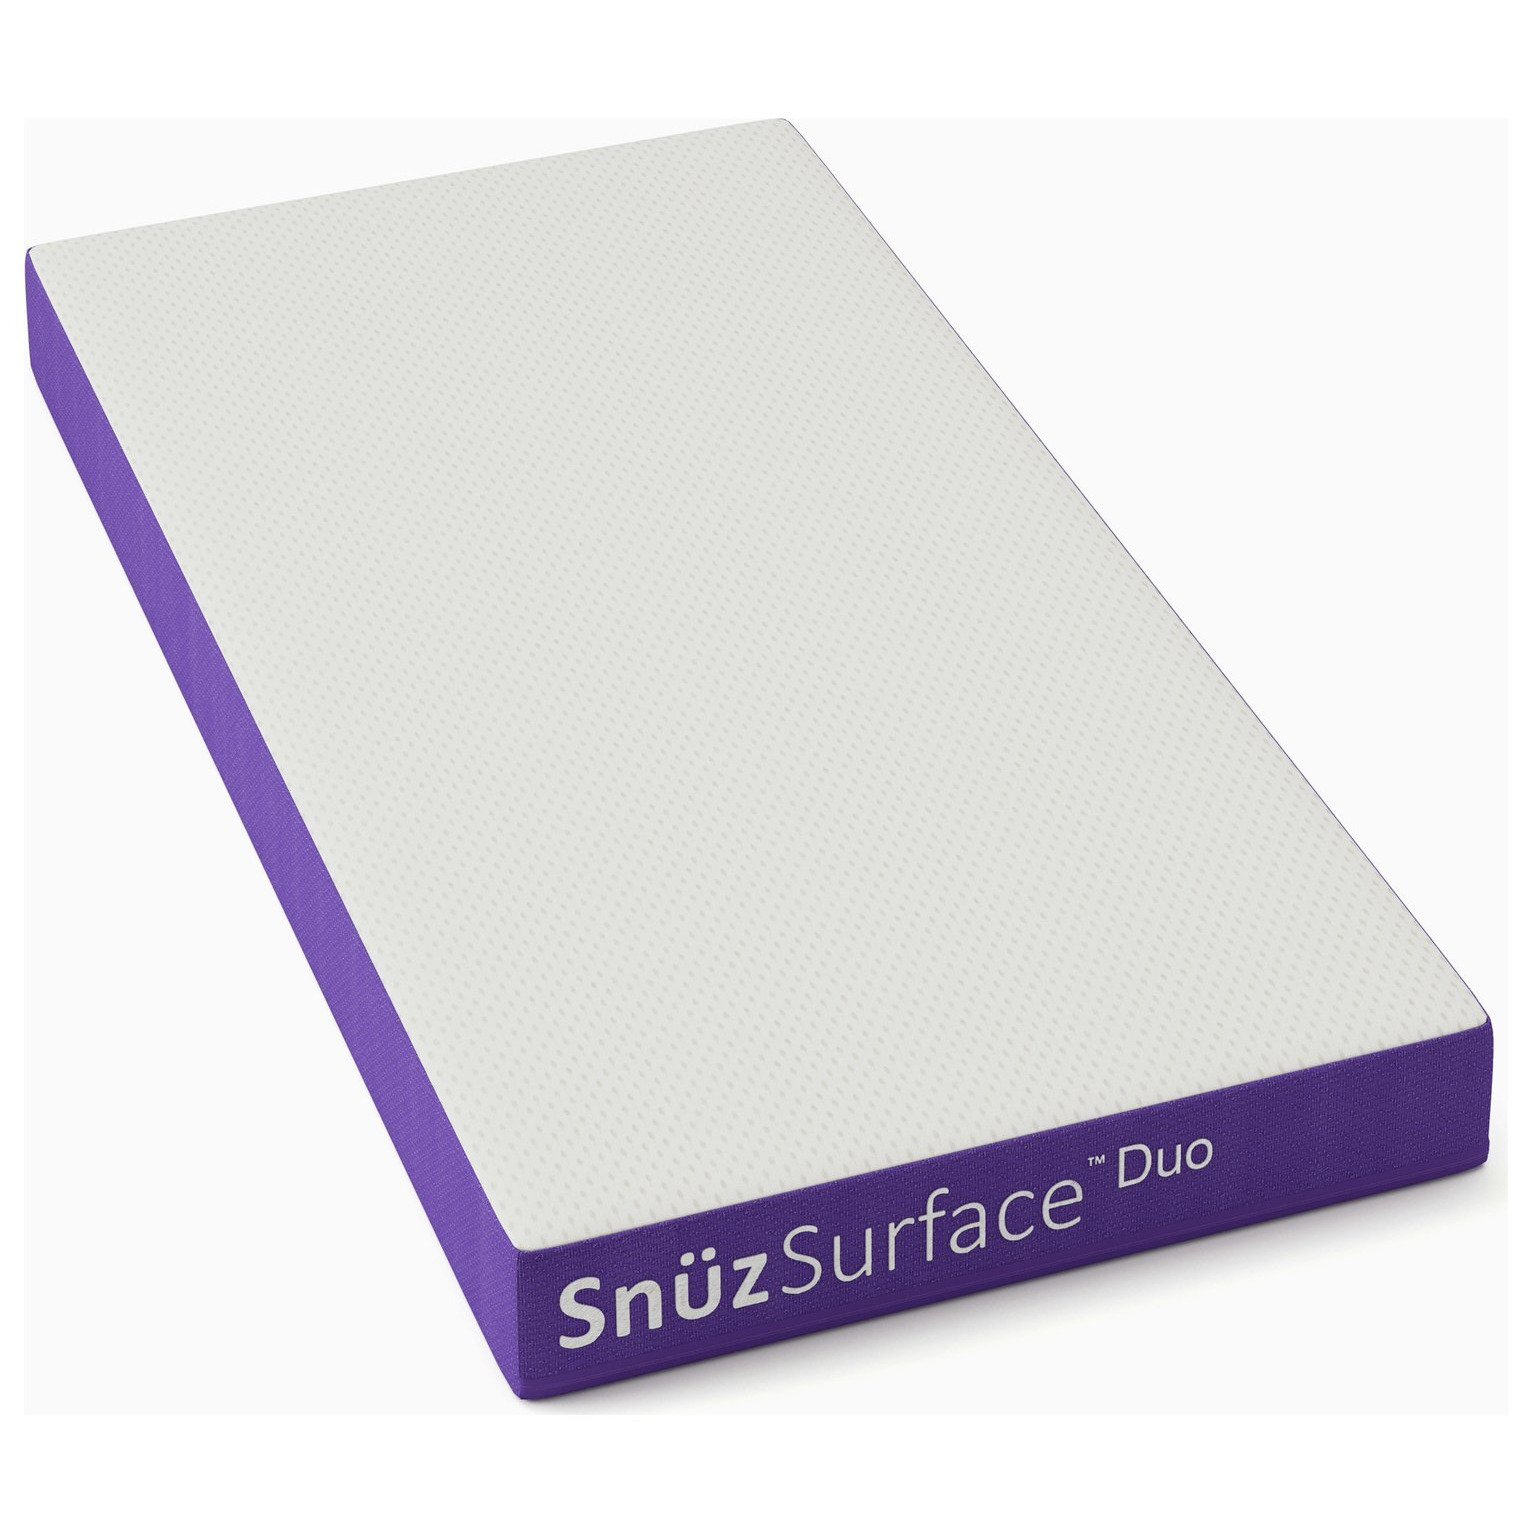 Snuz Surface Duo 60x120cm Cot Mattress - image 1